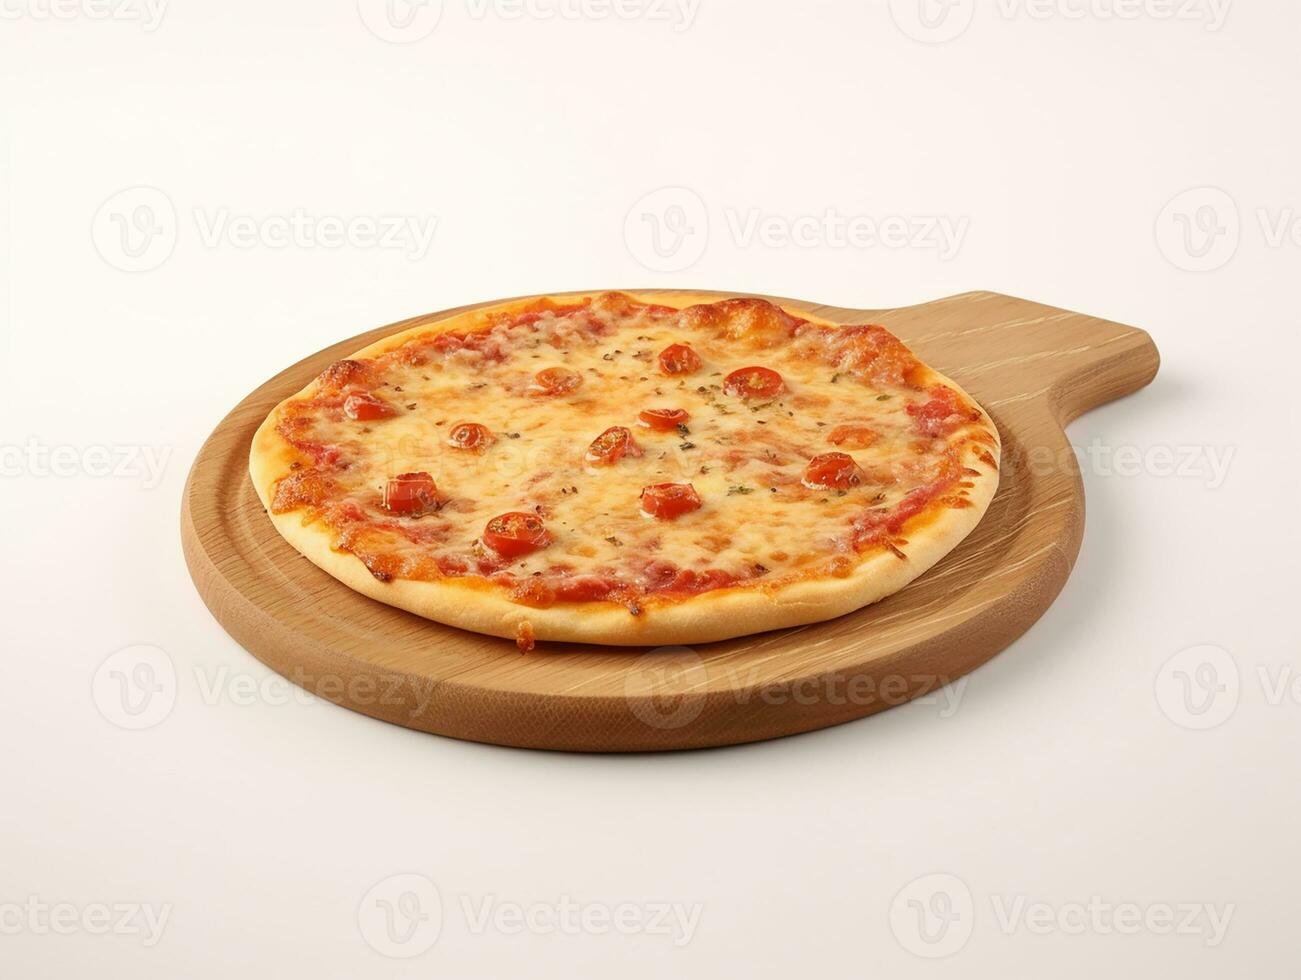 delicioso velozes Comida pizza cheio cobertura dentro uma círculo de madeira descanso de mesa restaurante foto